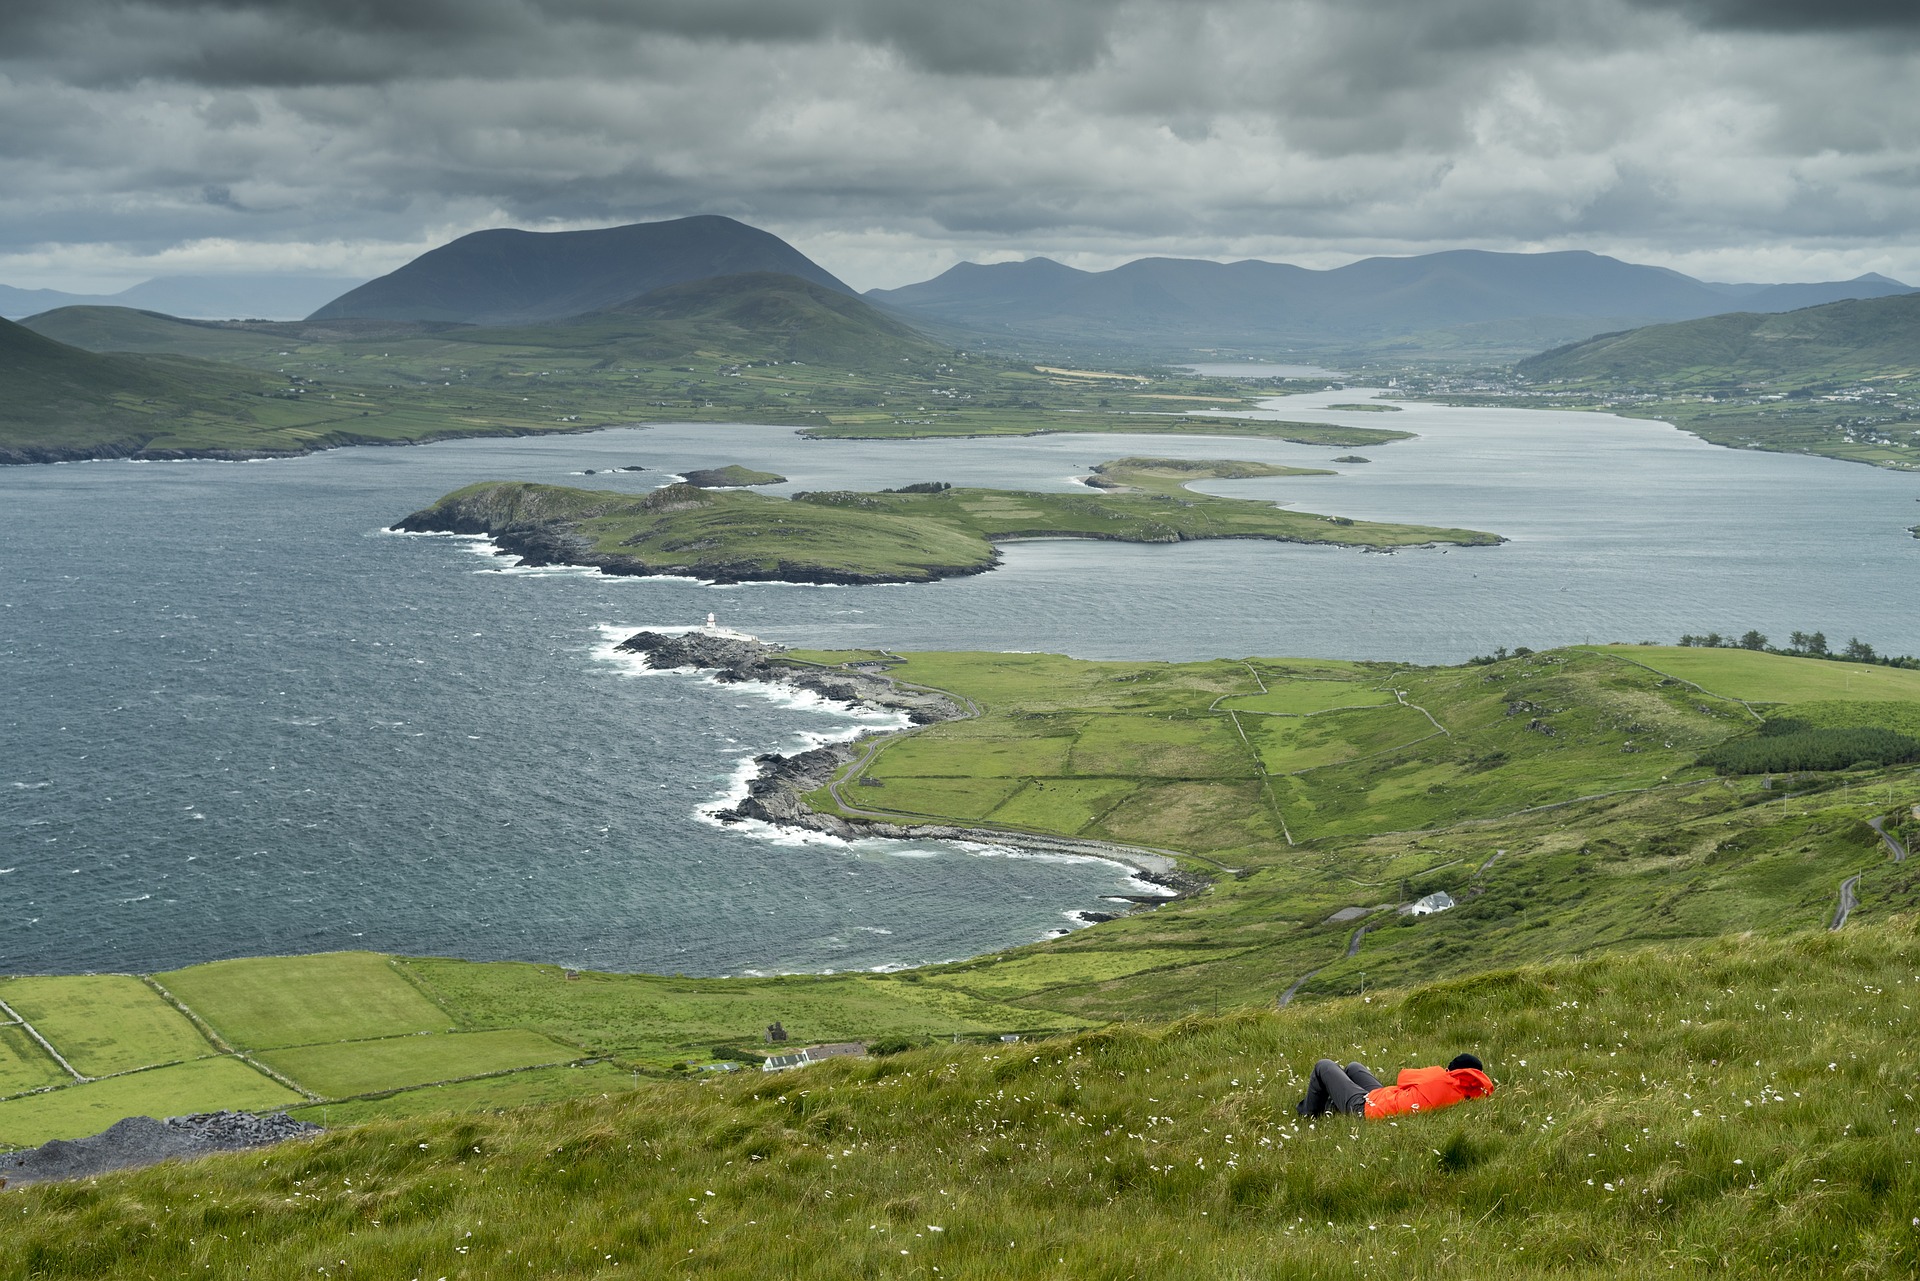 Seorang pejalan kaki berbaring di rerumputan dengan pemandangan indah di Irlandia